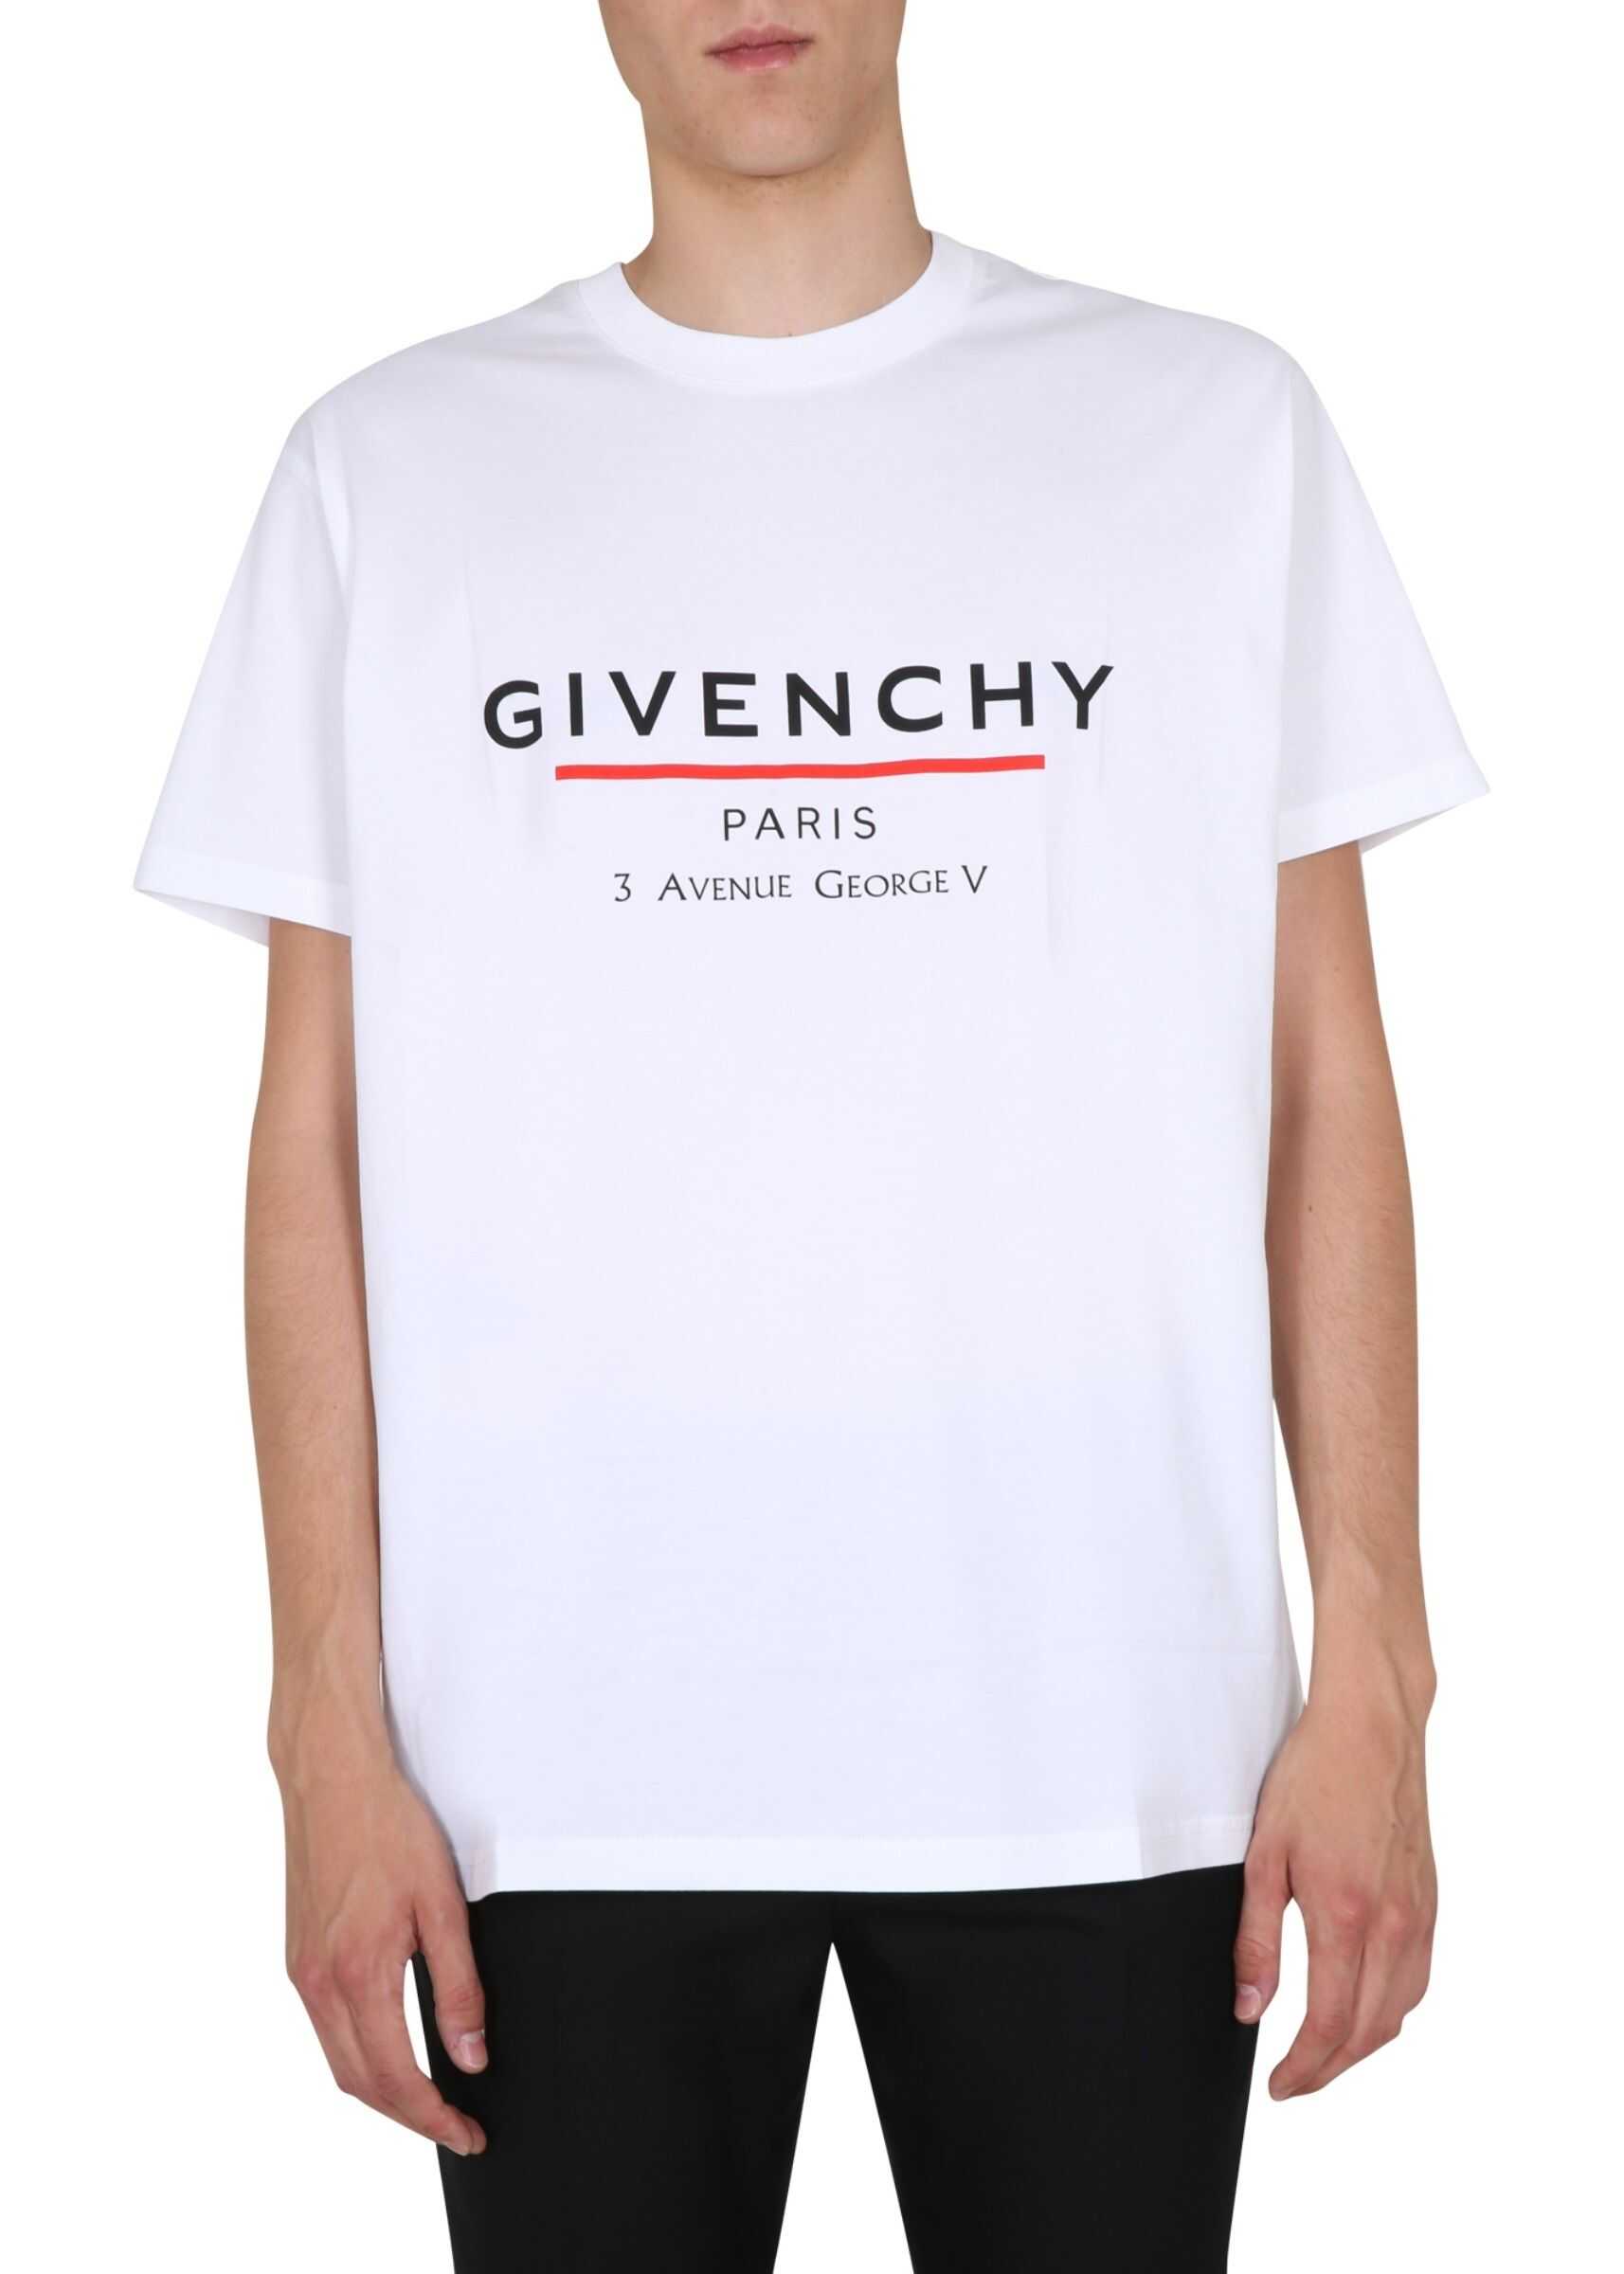 celebrate Addiction magnification Givenchy Oversize Fit T-Shirt WHITE - Givenchy - Tricouri si Maiouri Barbati